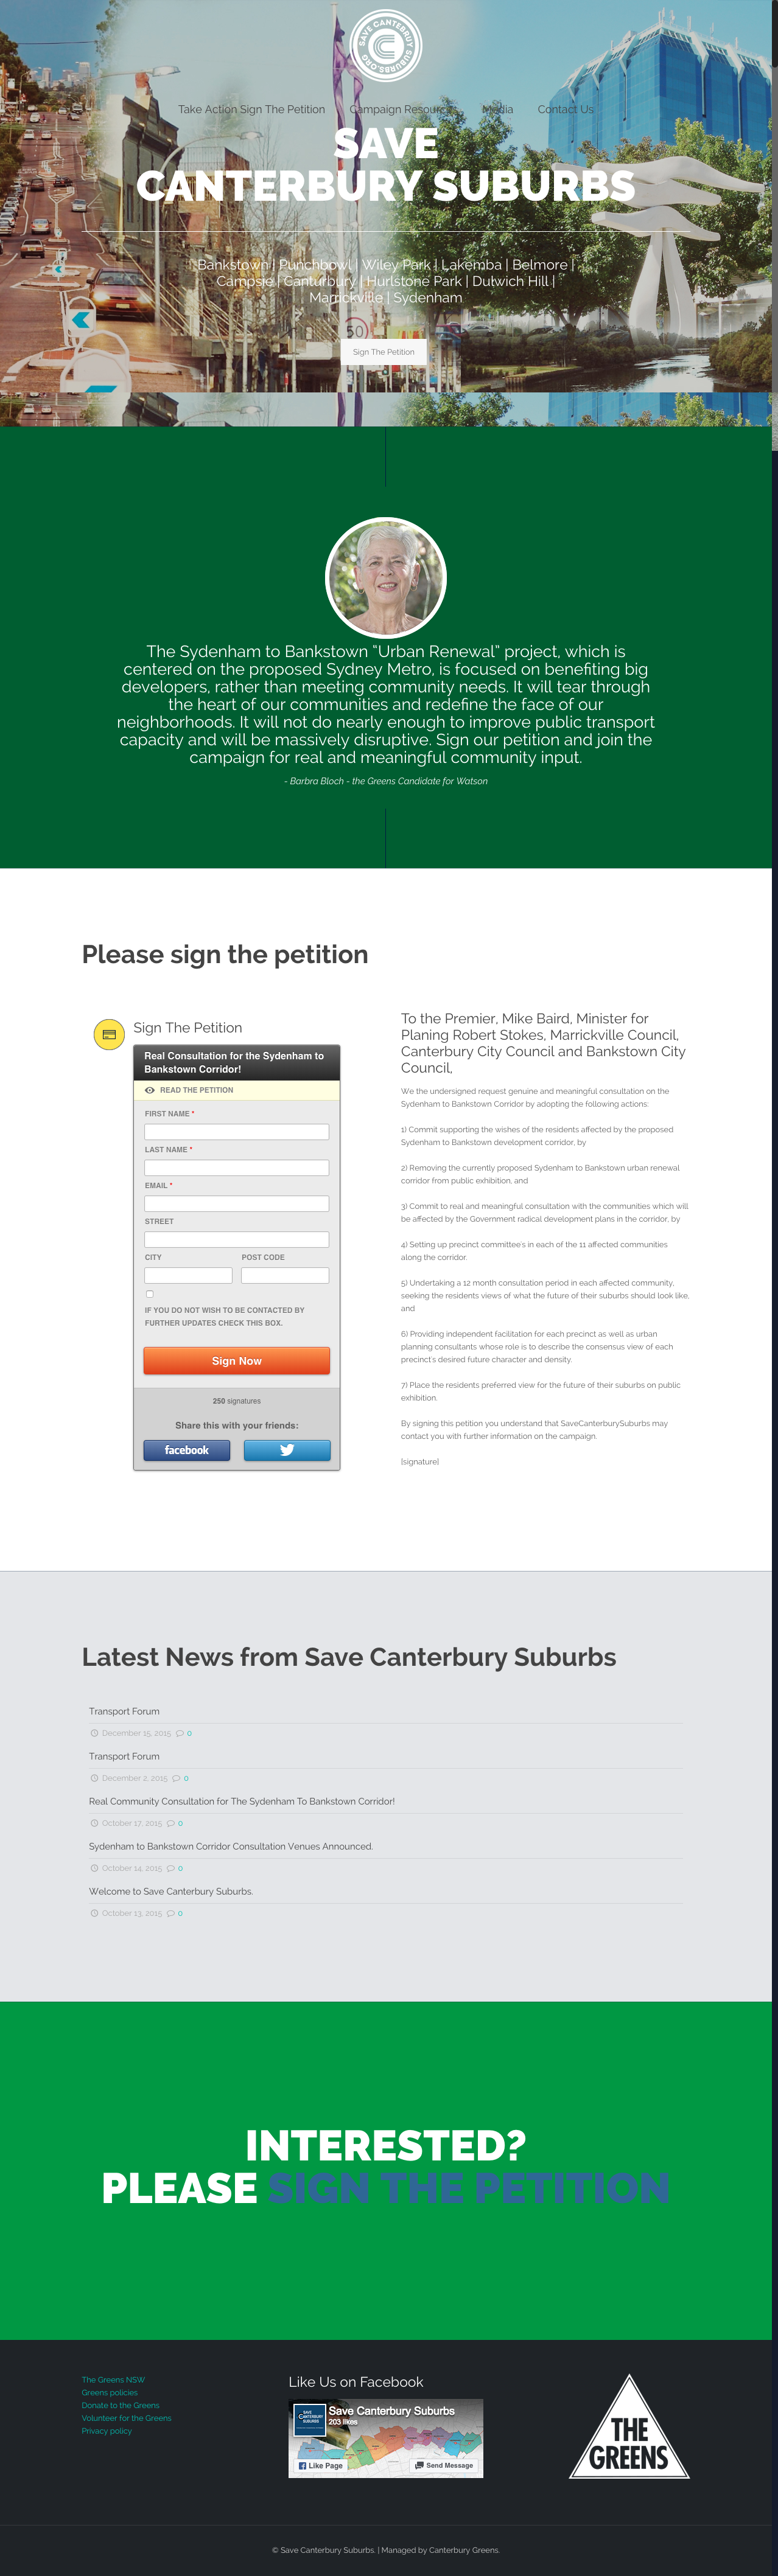 Save Canterbury Suburbs